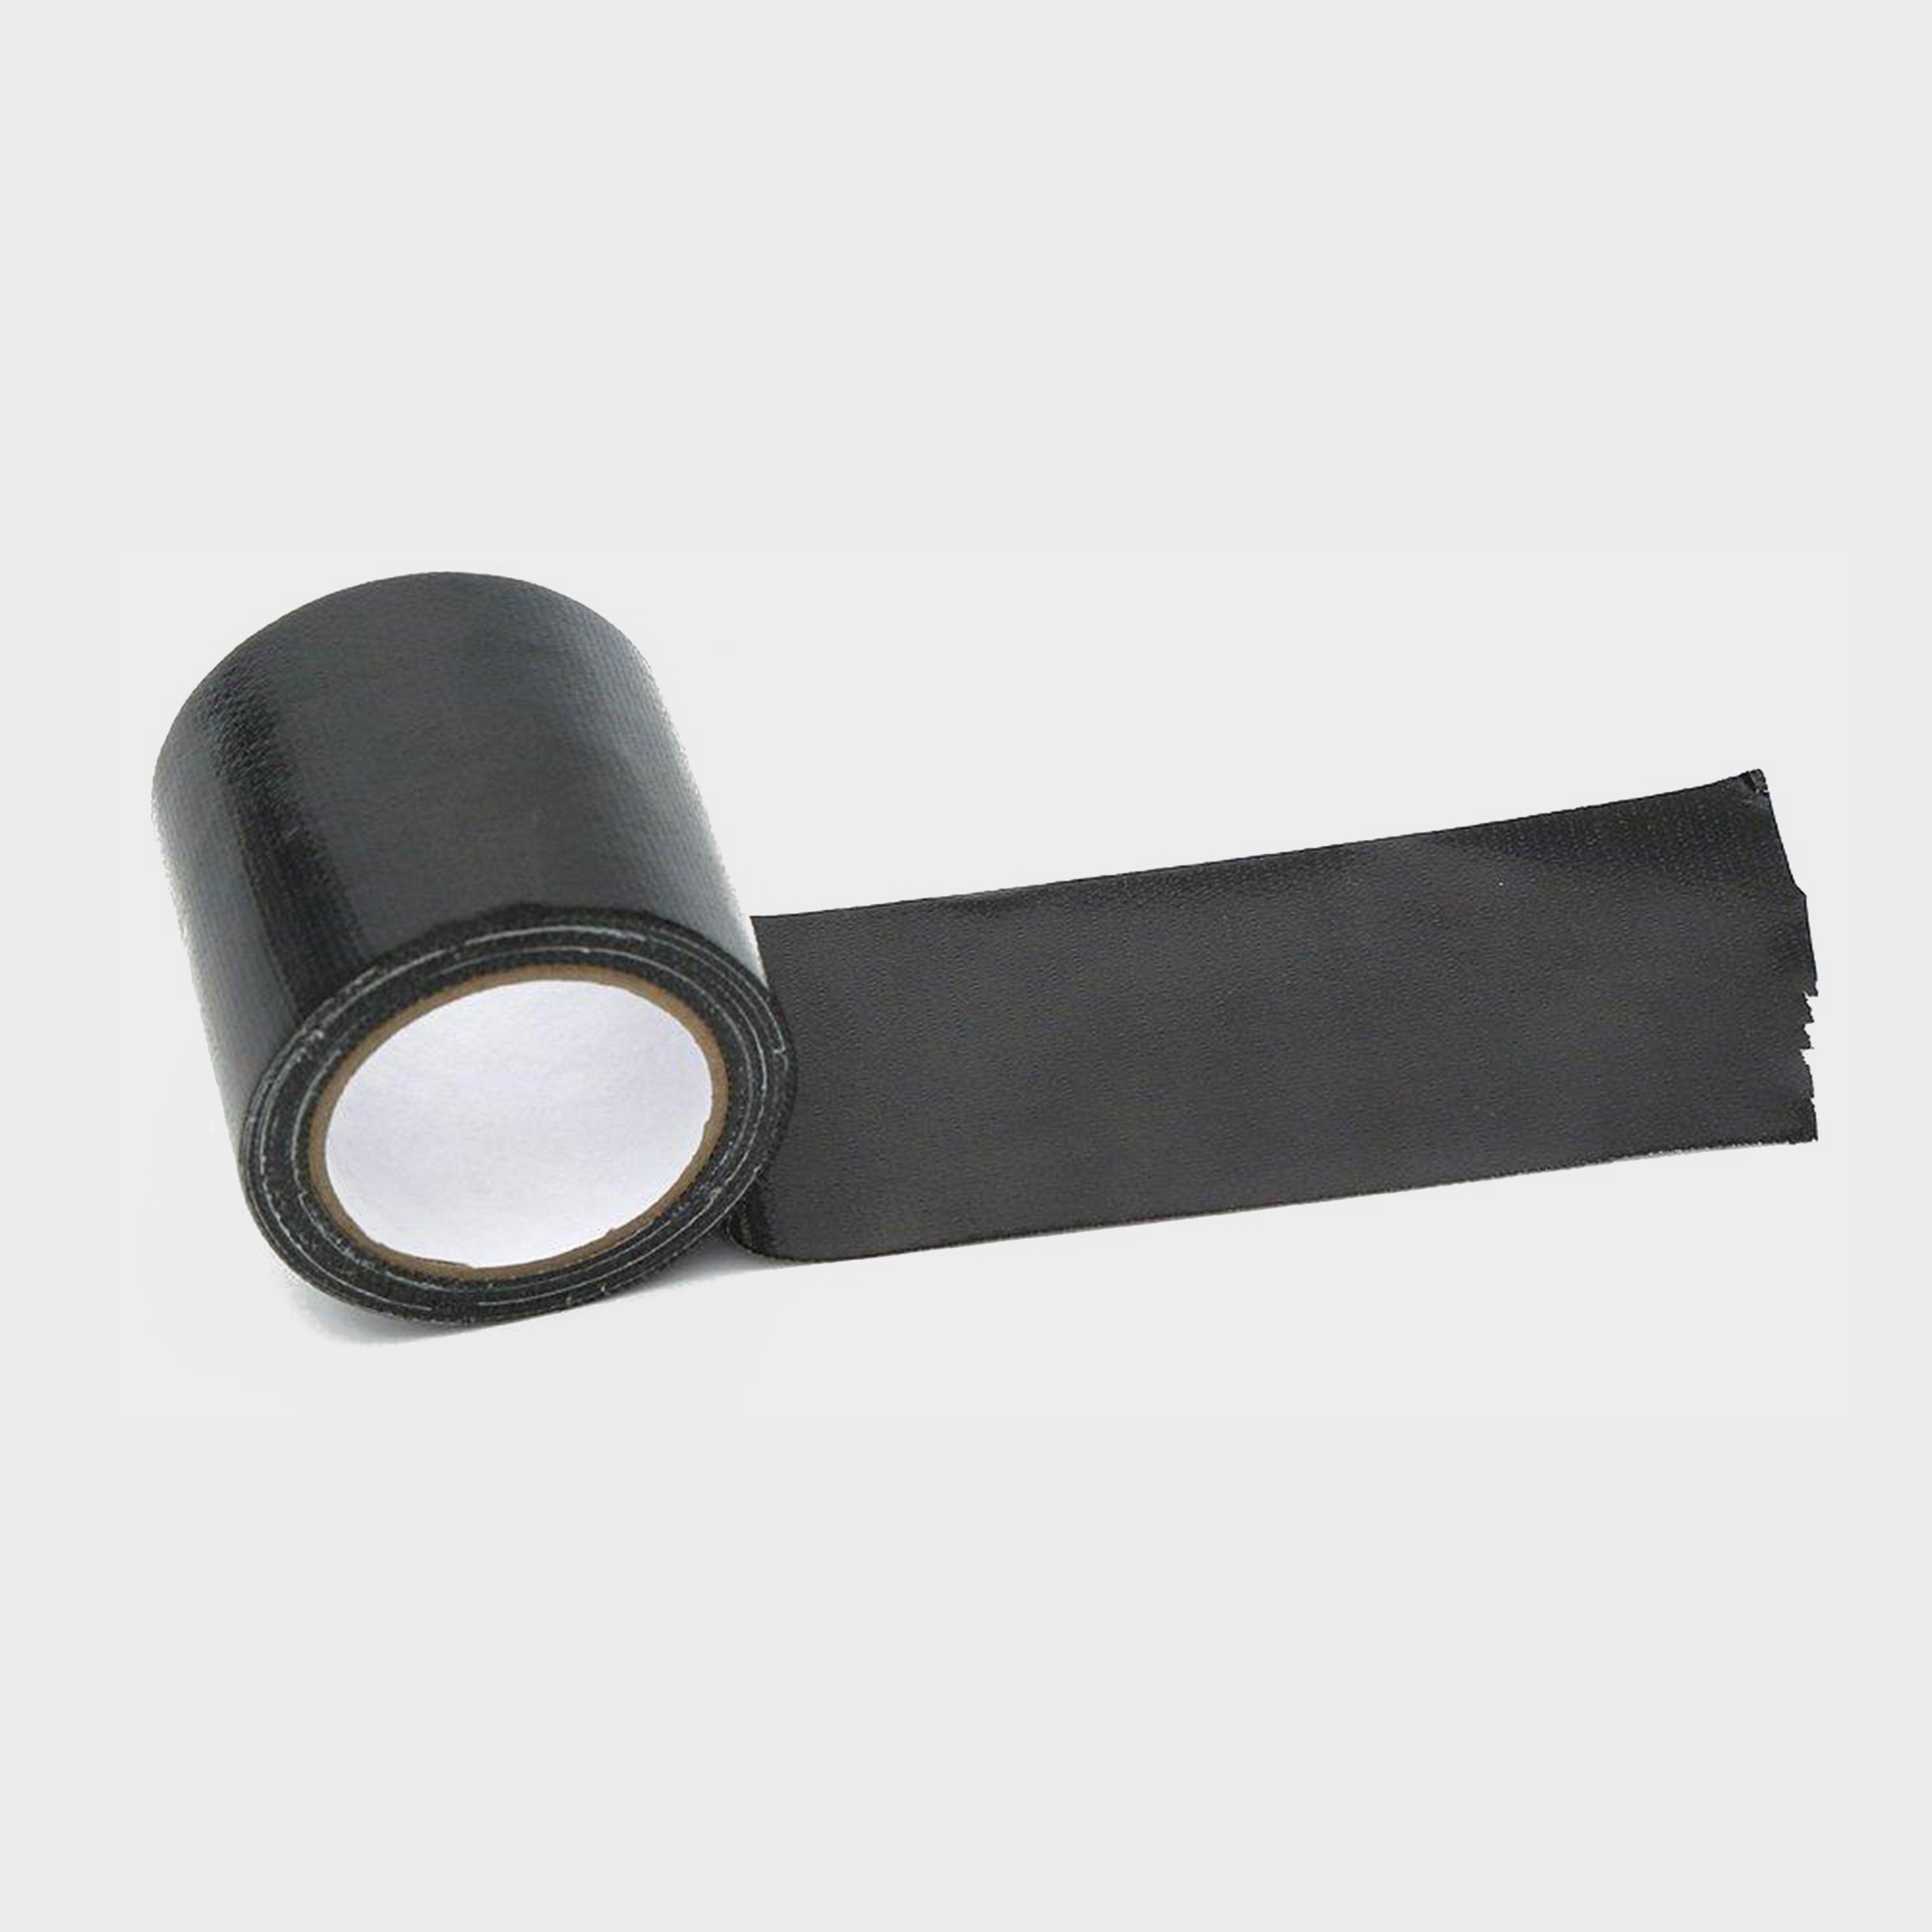 Oex Gaffer Tape - Black/tape  Black/tape